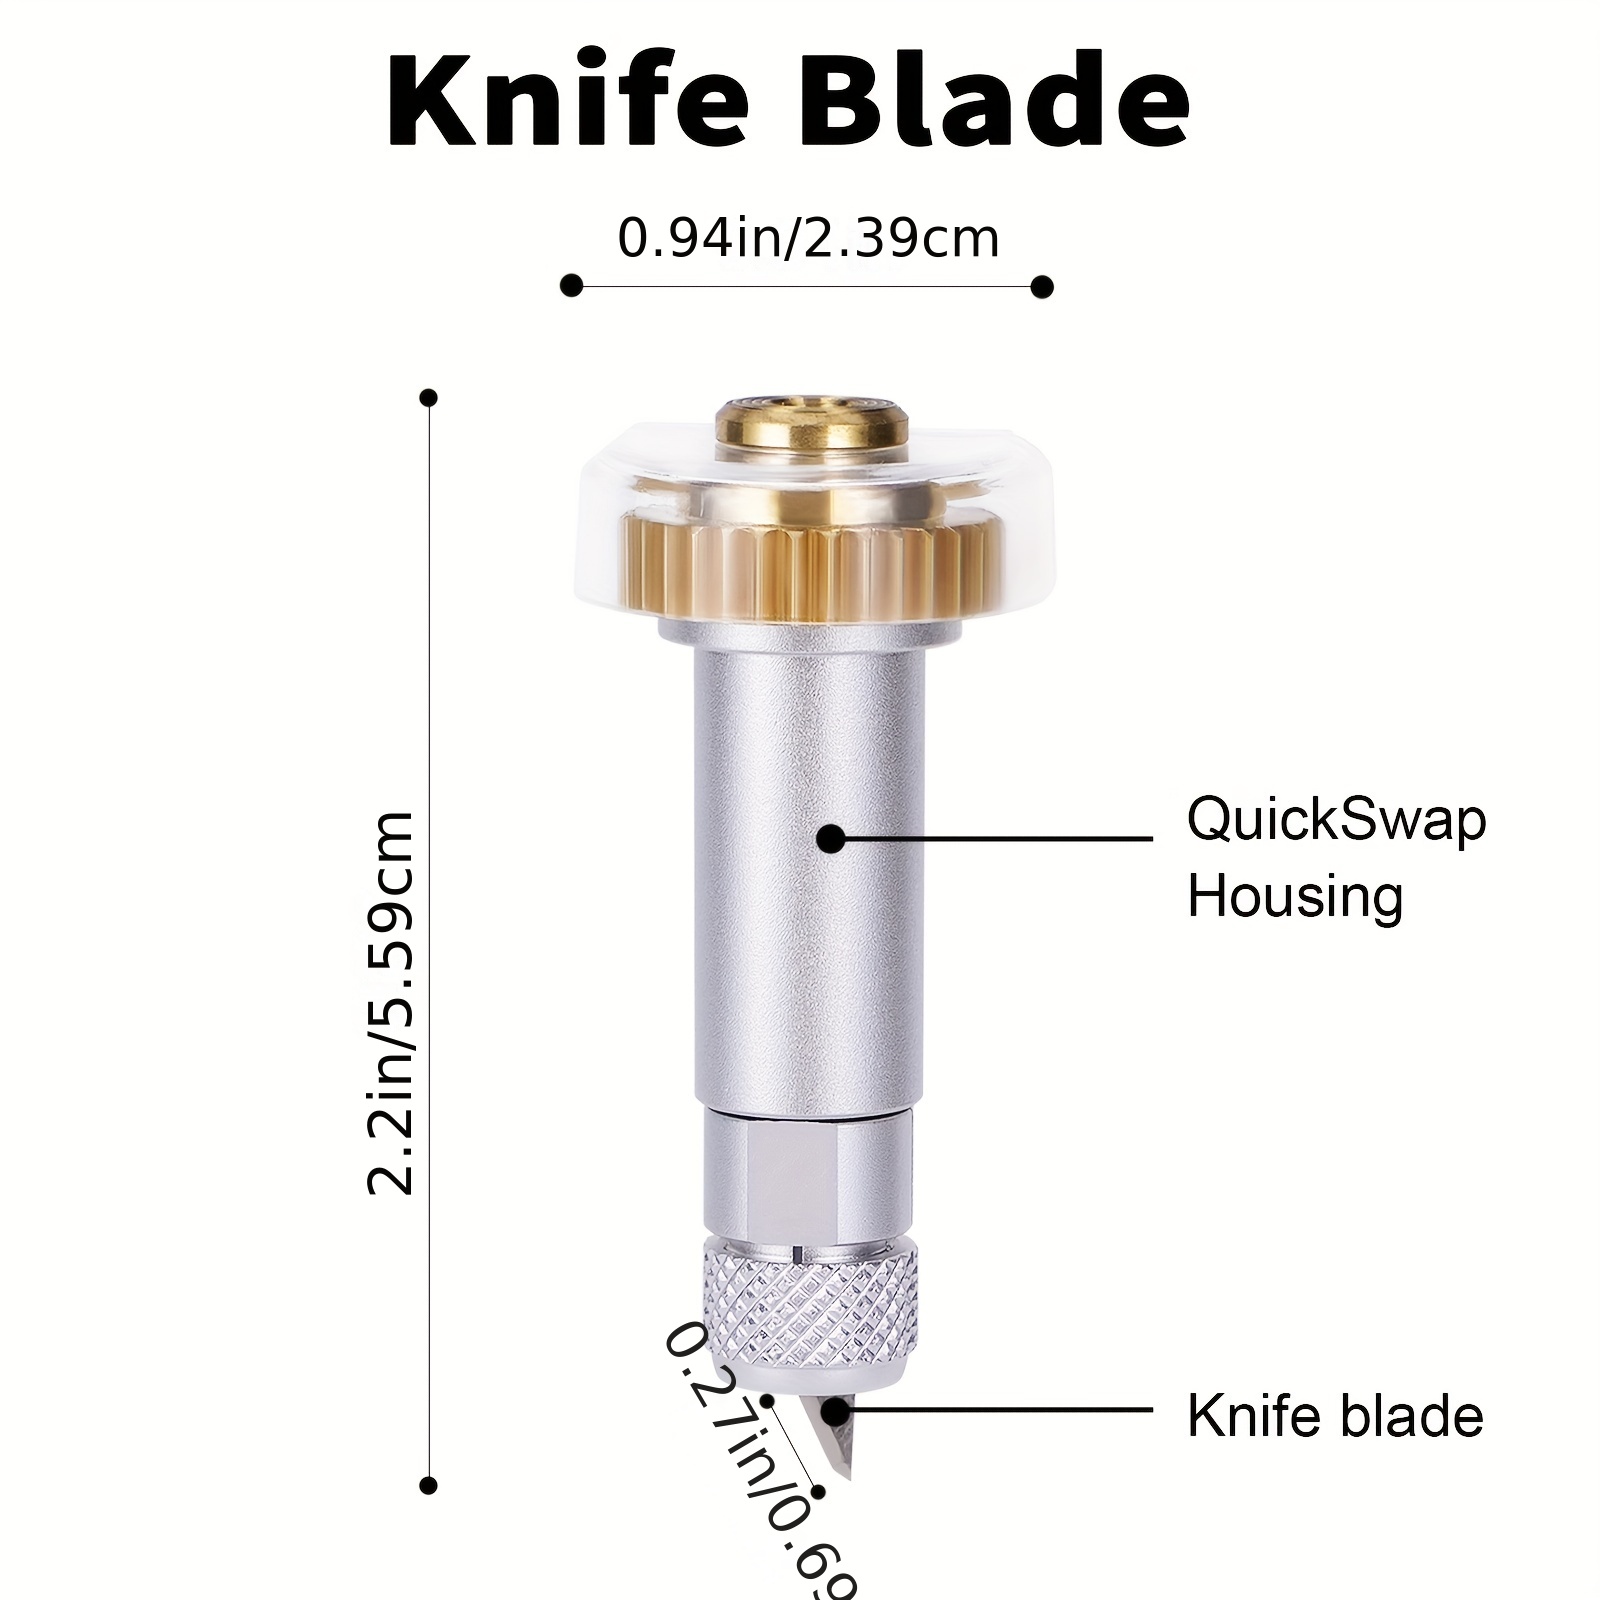 How to Cut Wood with a Cricut Using the Cricut Knife Blade 